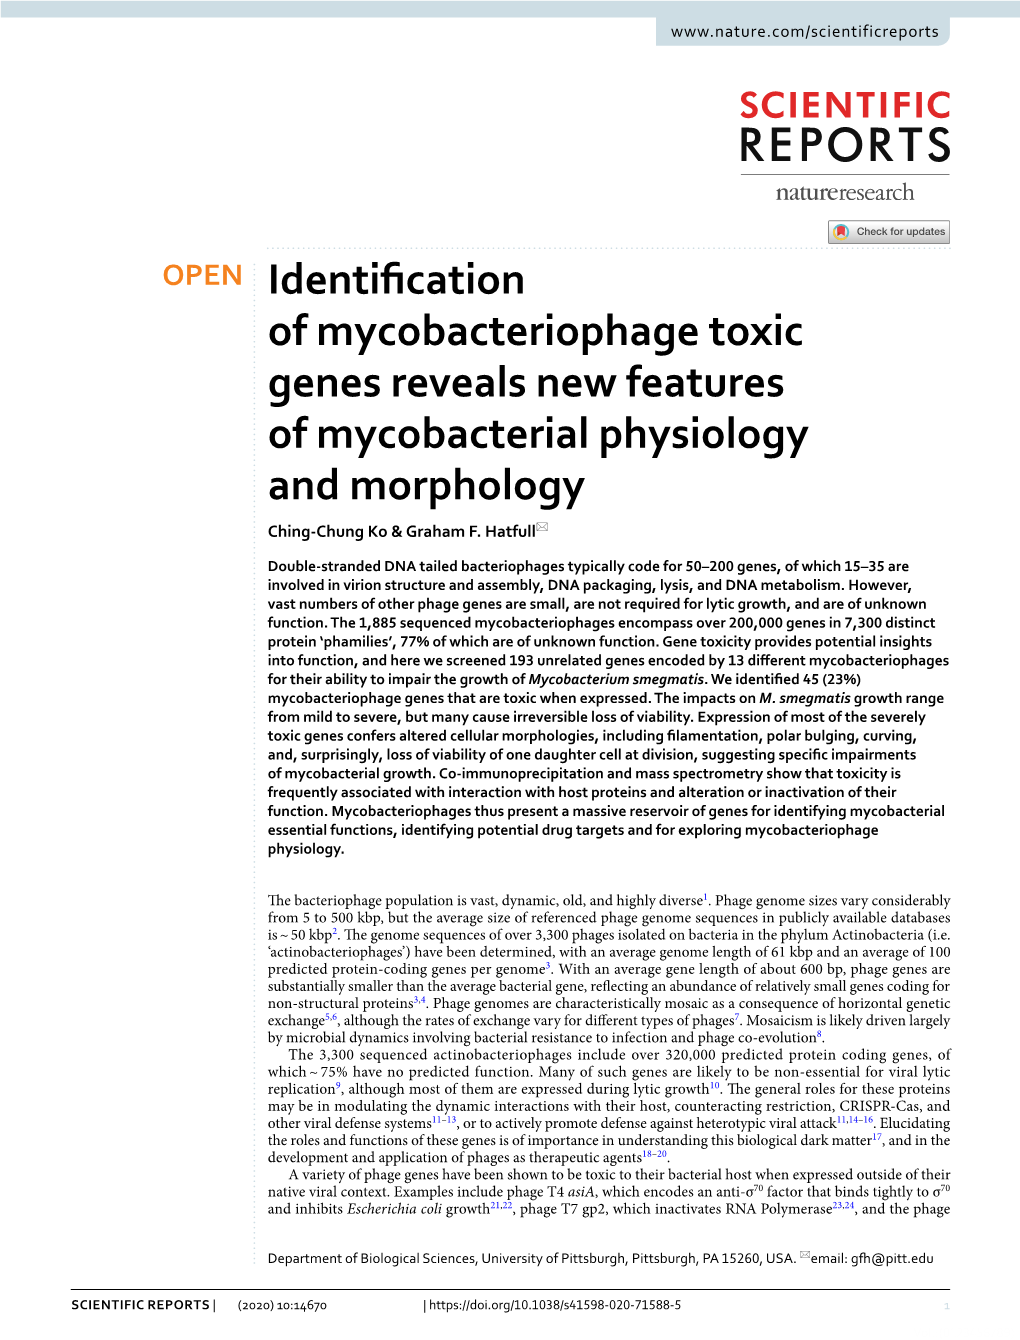 Identification of Mycobacteriophage Toxic Genes Reveals New Features Of